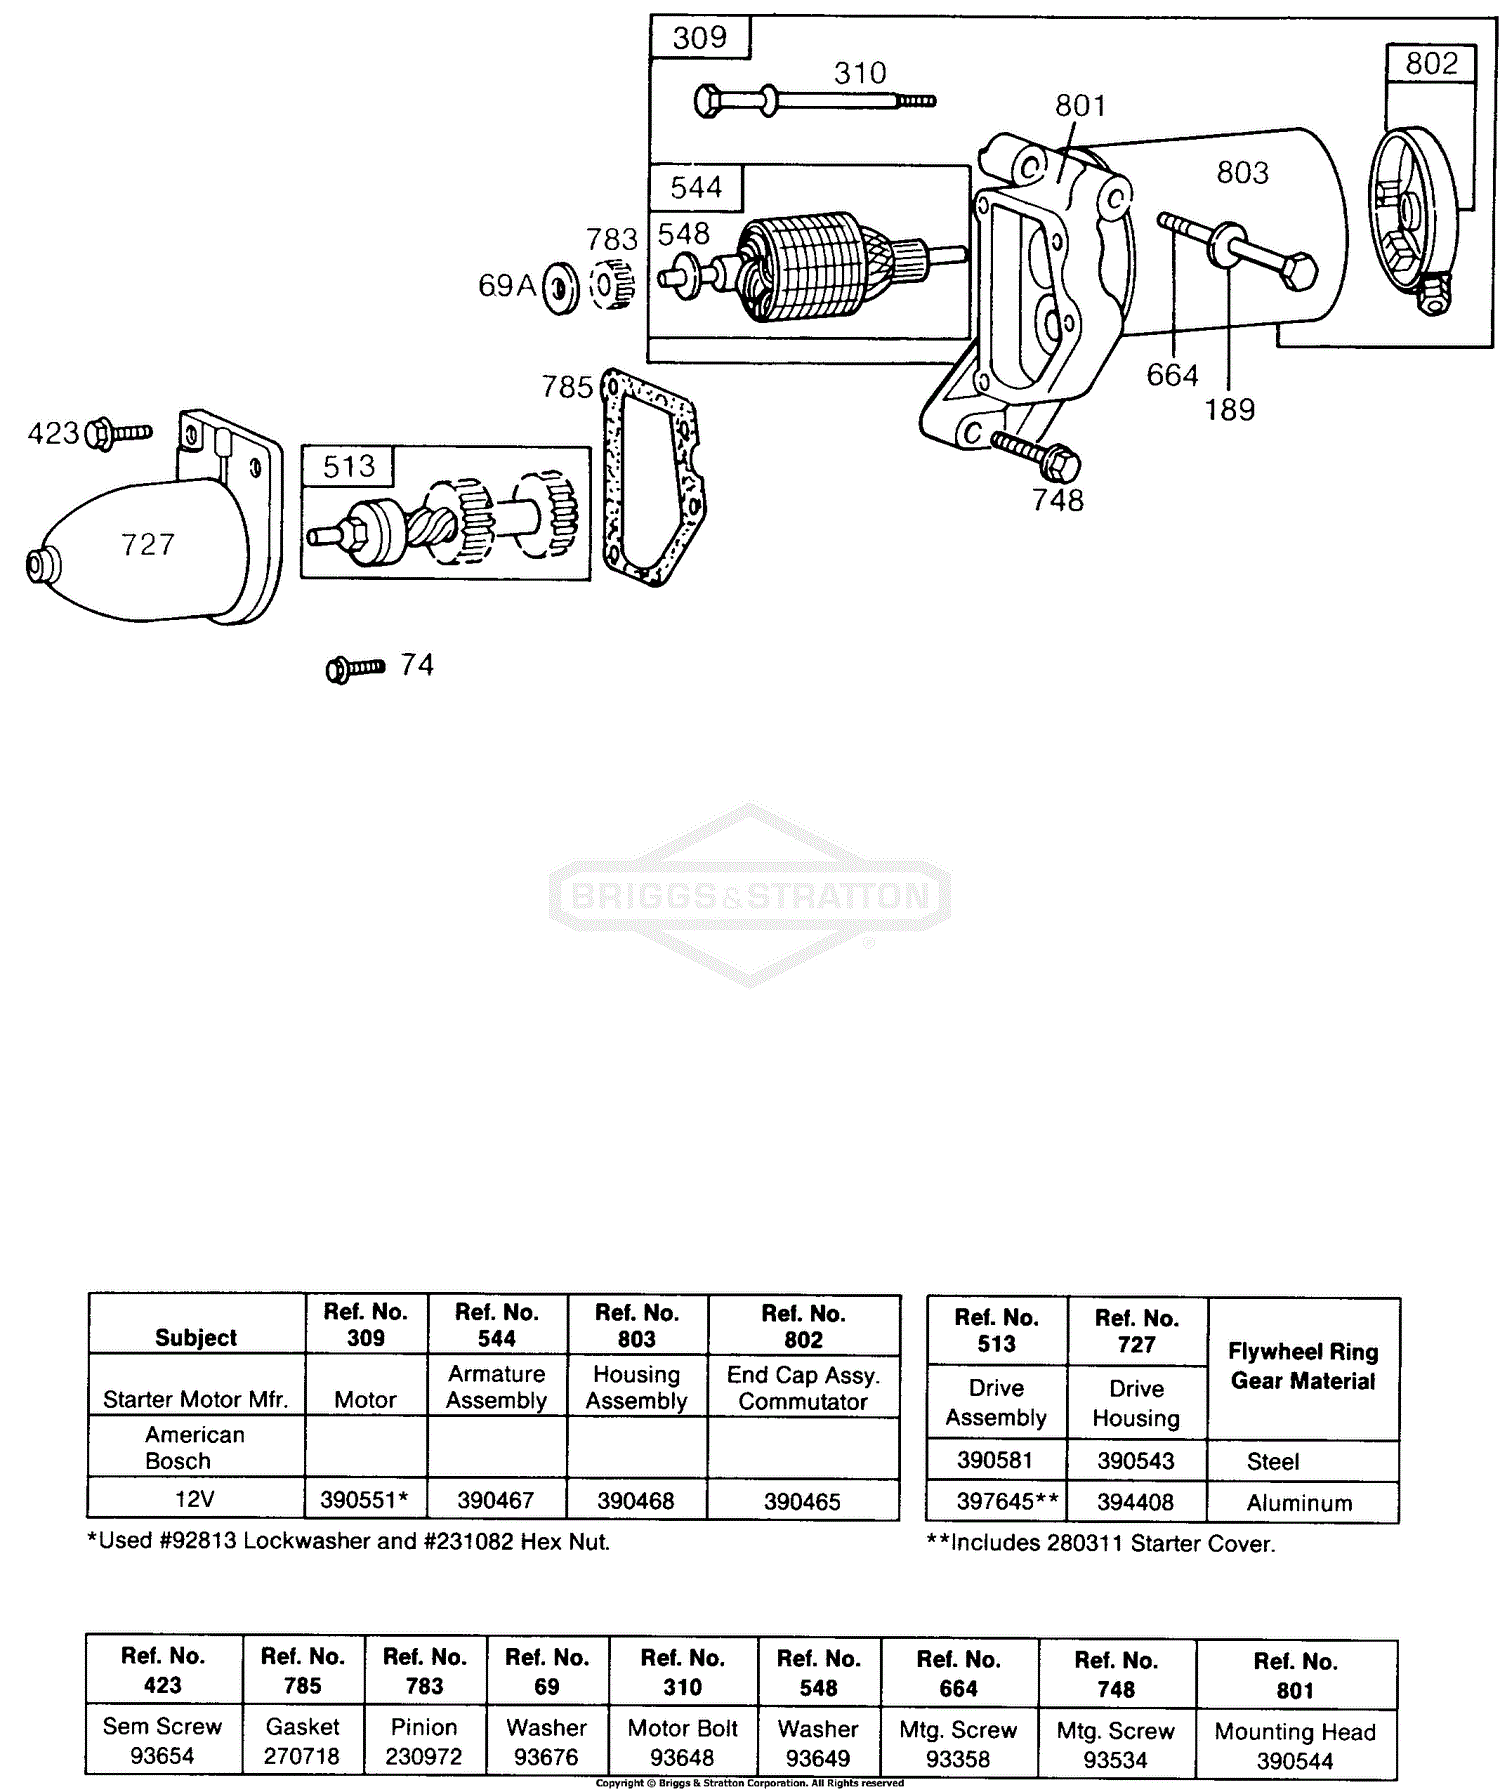 https://az417944.vo.msecnd.net/diagrams/manufacturer/briggs-stratton/briggs-stratton-engine/100000-19z999-series/131200-to-131299/131212-2024-01/electric-starter/diagram.gif